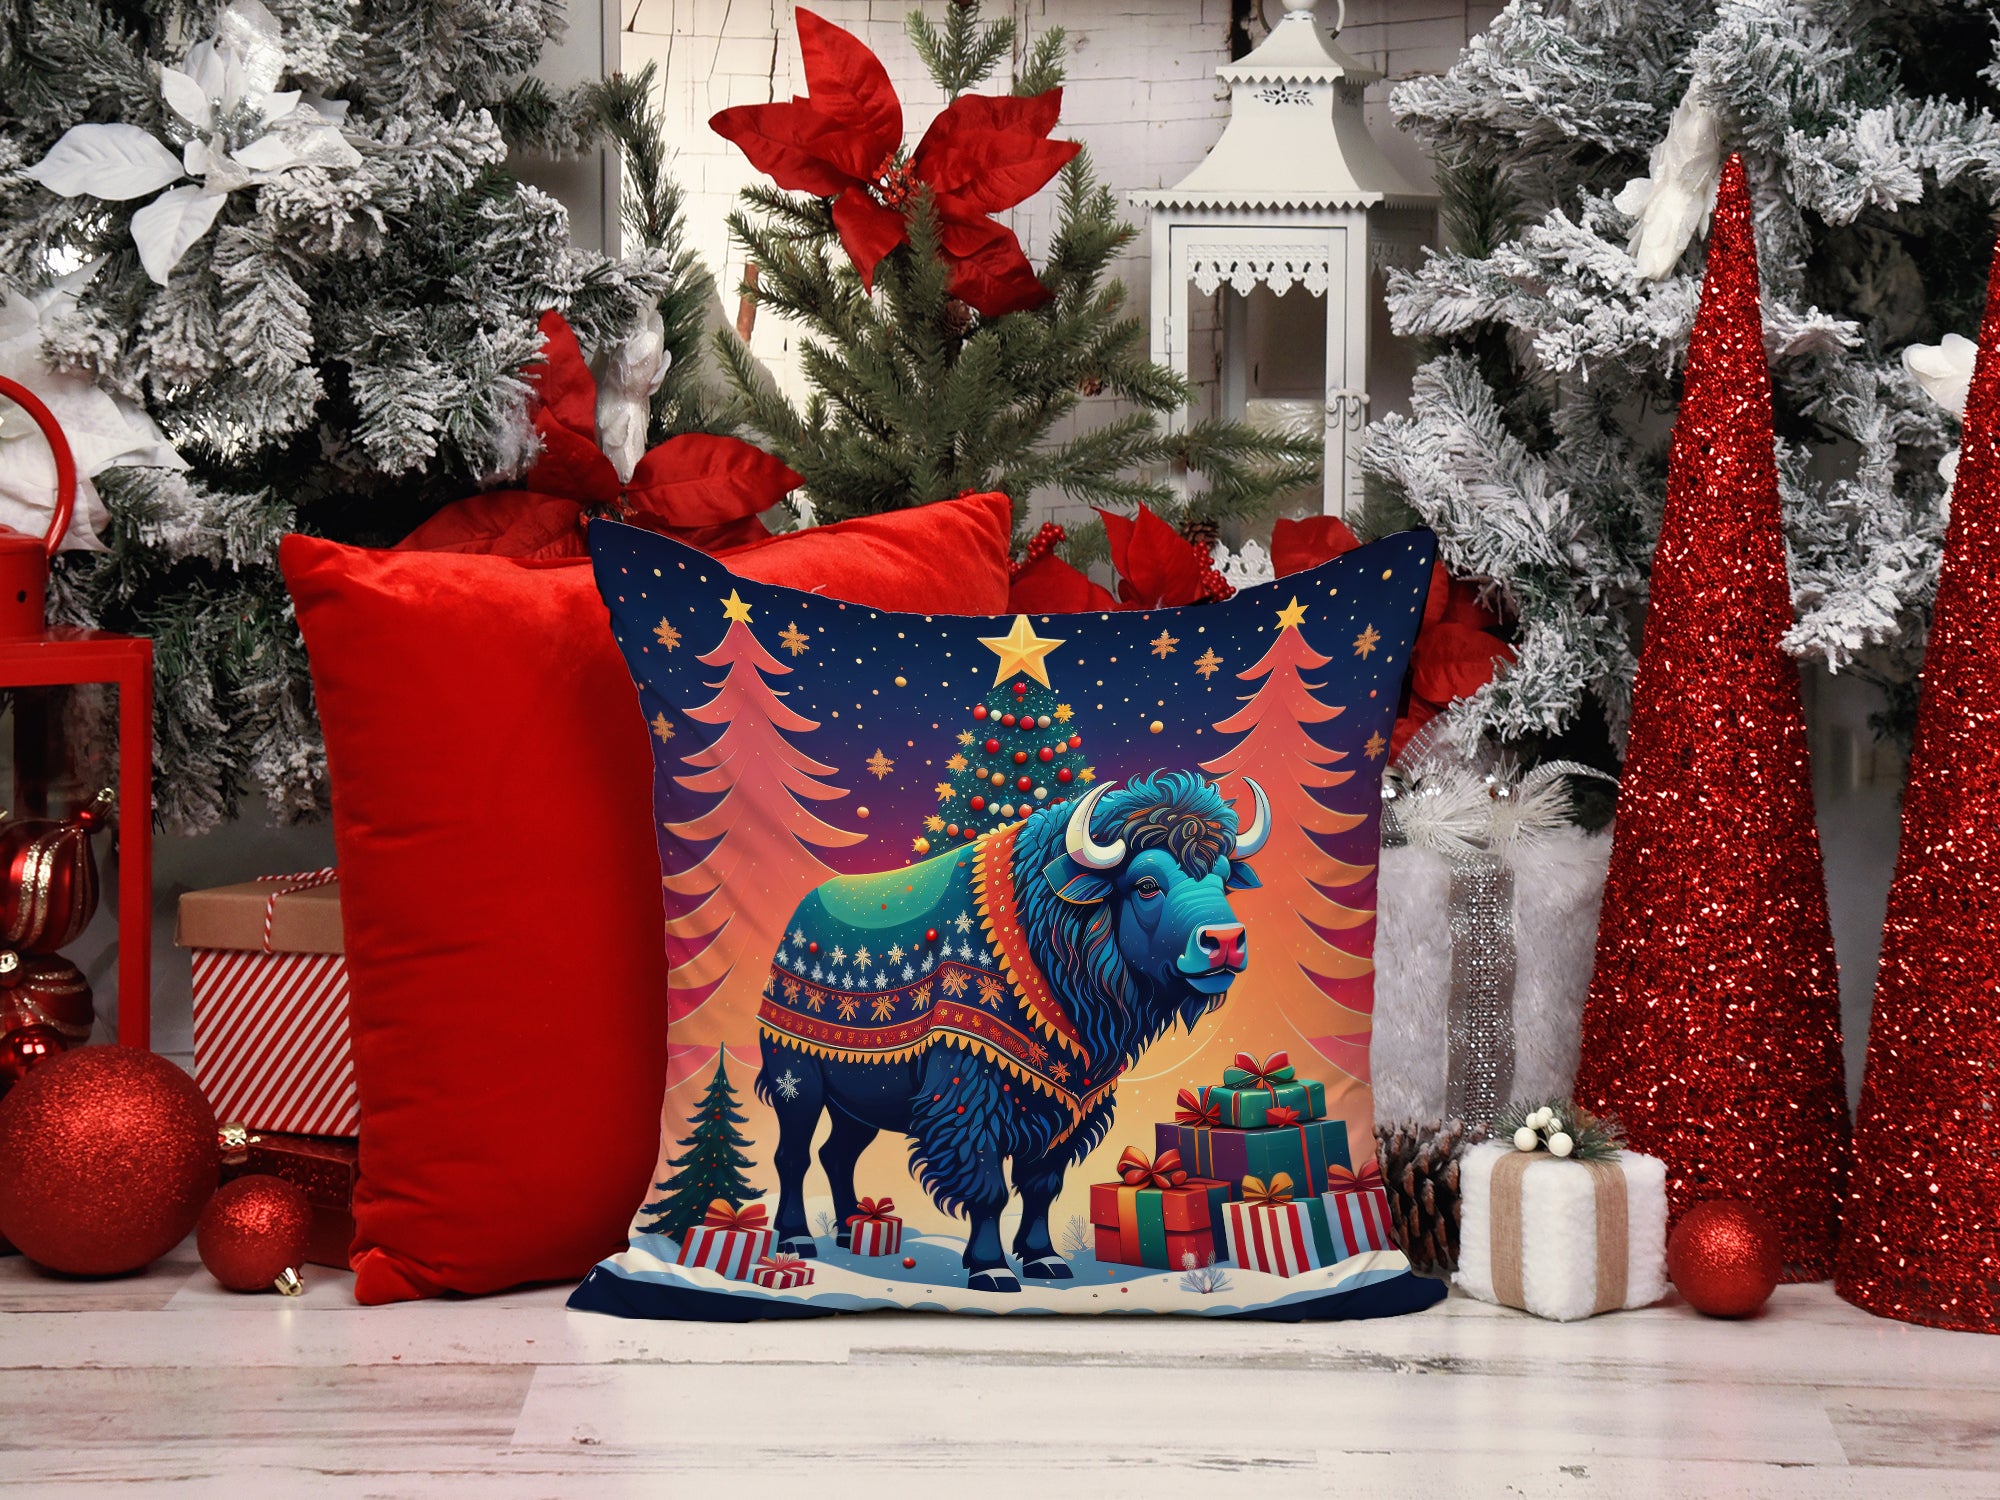 Buy this Buffalo Christmas Fabric Decorative Pillow